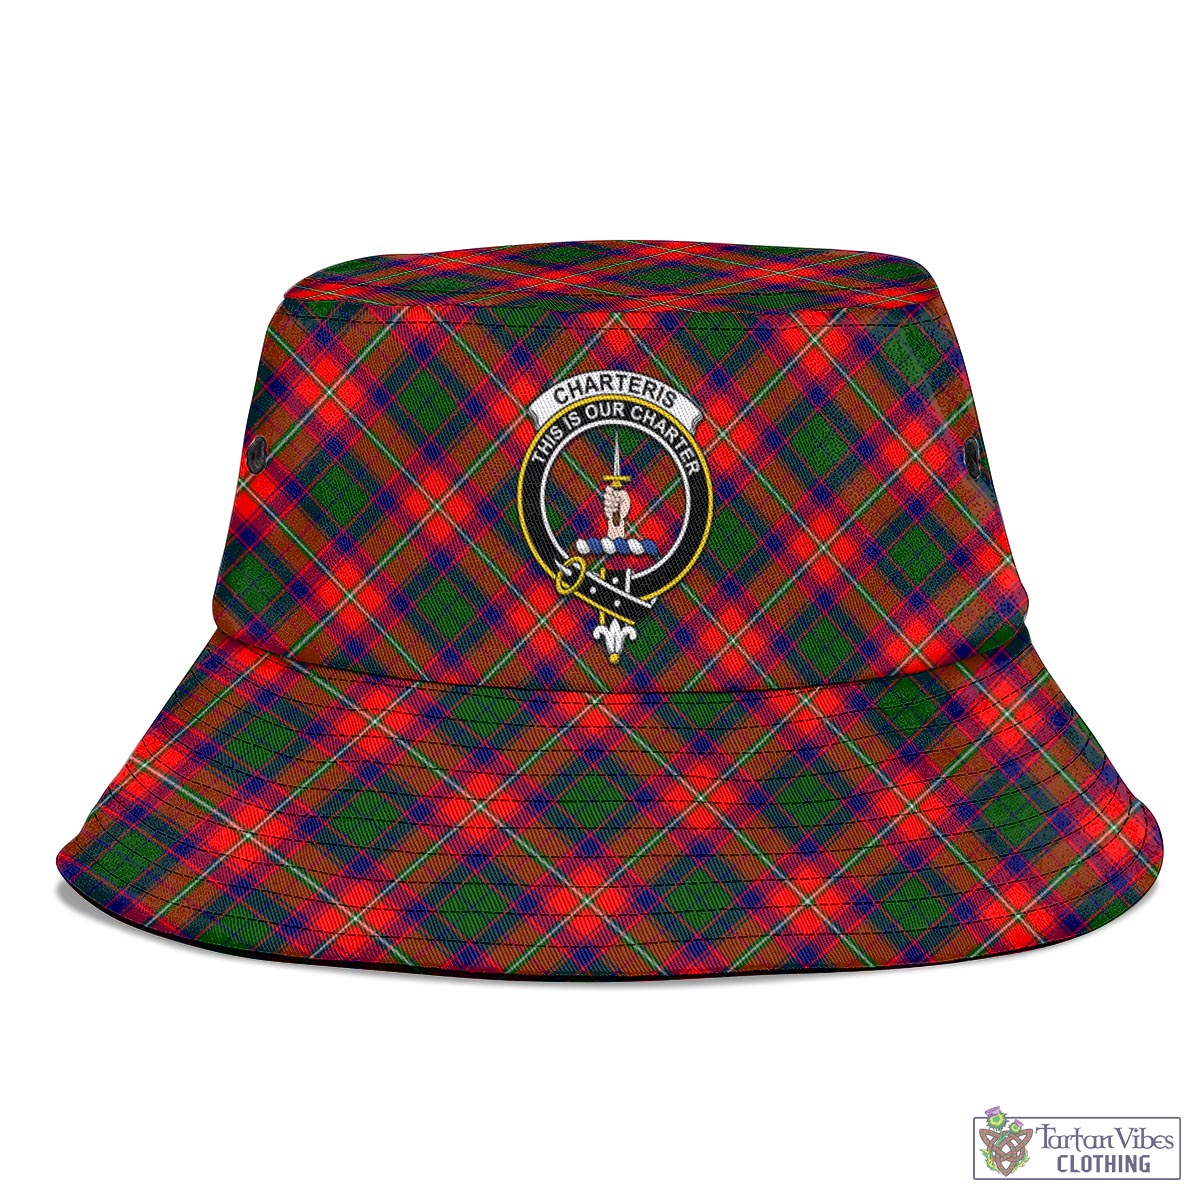 Tartan Vibes Clothing Charteris Tartan Bucket Hat with Family Crest